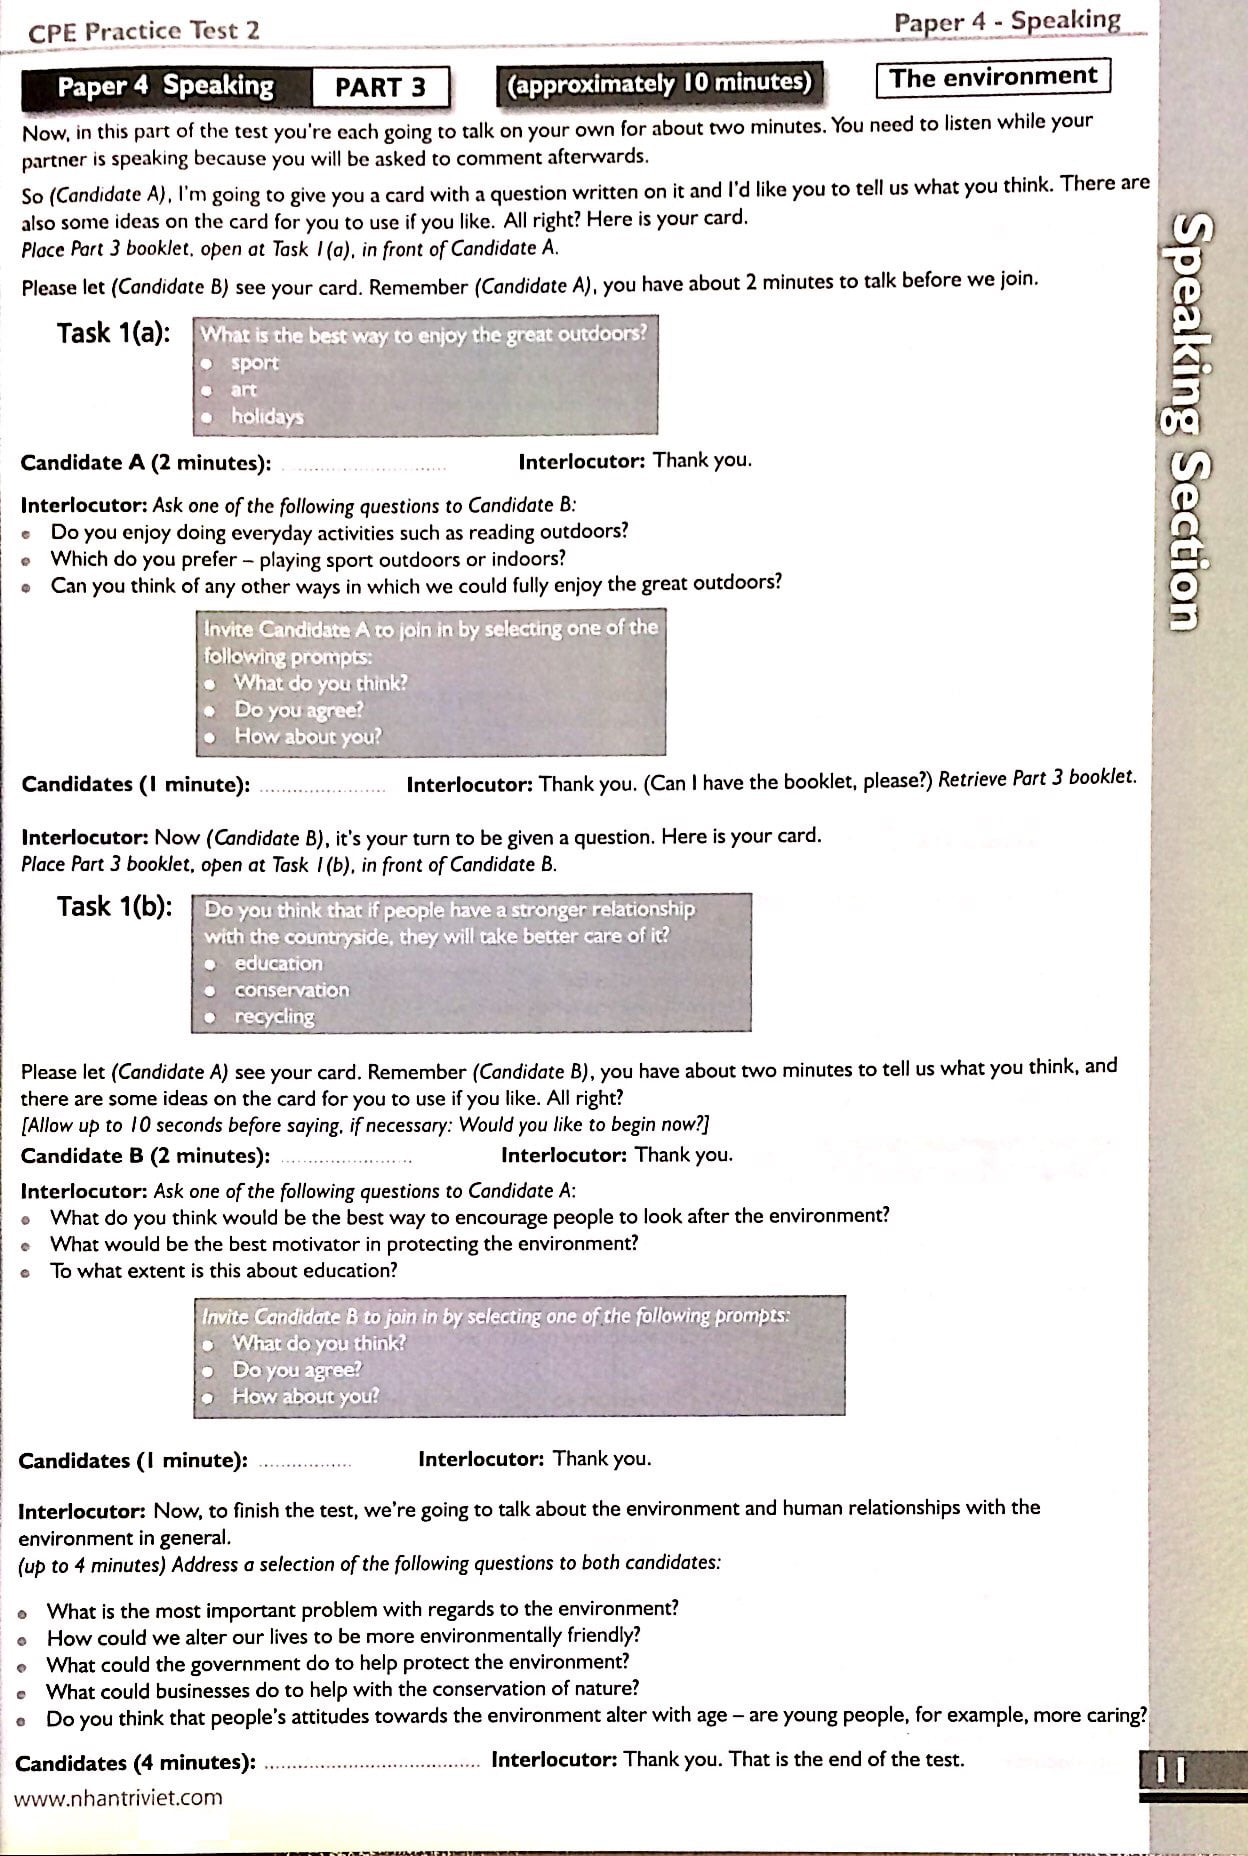 Succeed In Cambridge English - Proficiency CPE - 8 Practice tests CD PDF